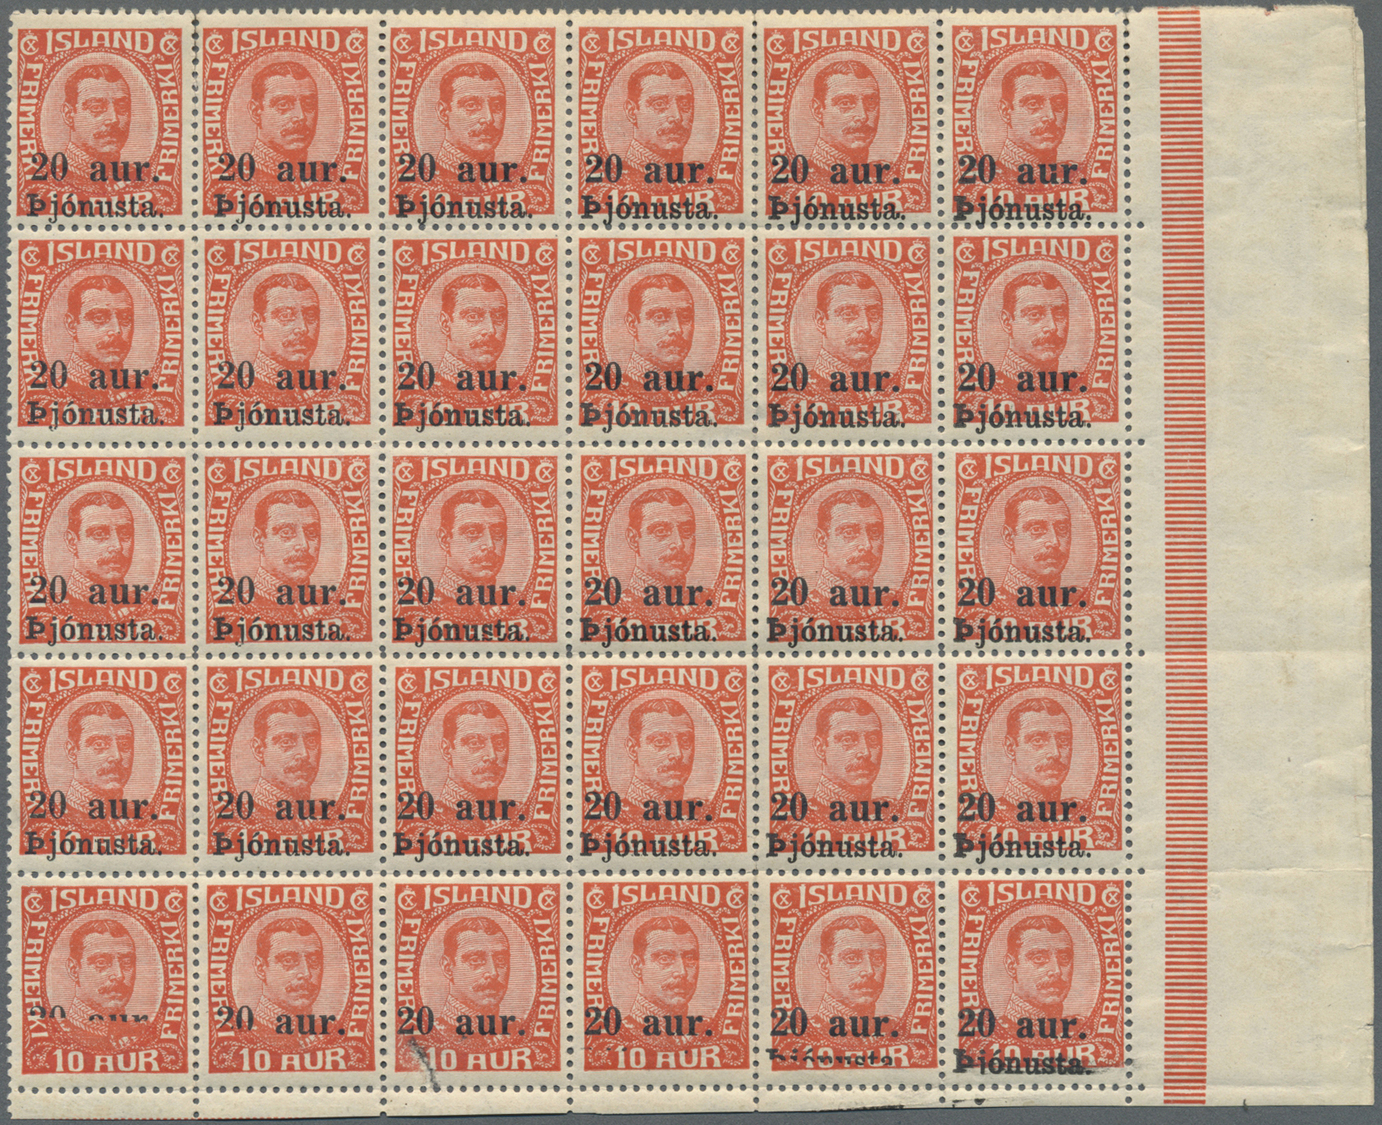 **/* Island - Dienstmarken: 1922:  Iceland 1920 10 Aur Definitive Overprinted In 1922 ‘20 Aur Pjonusta’. Marginal C - Service